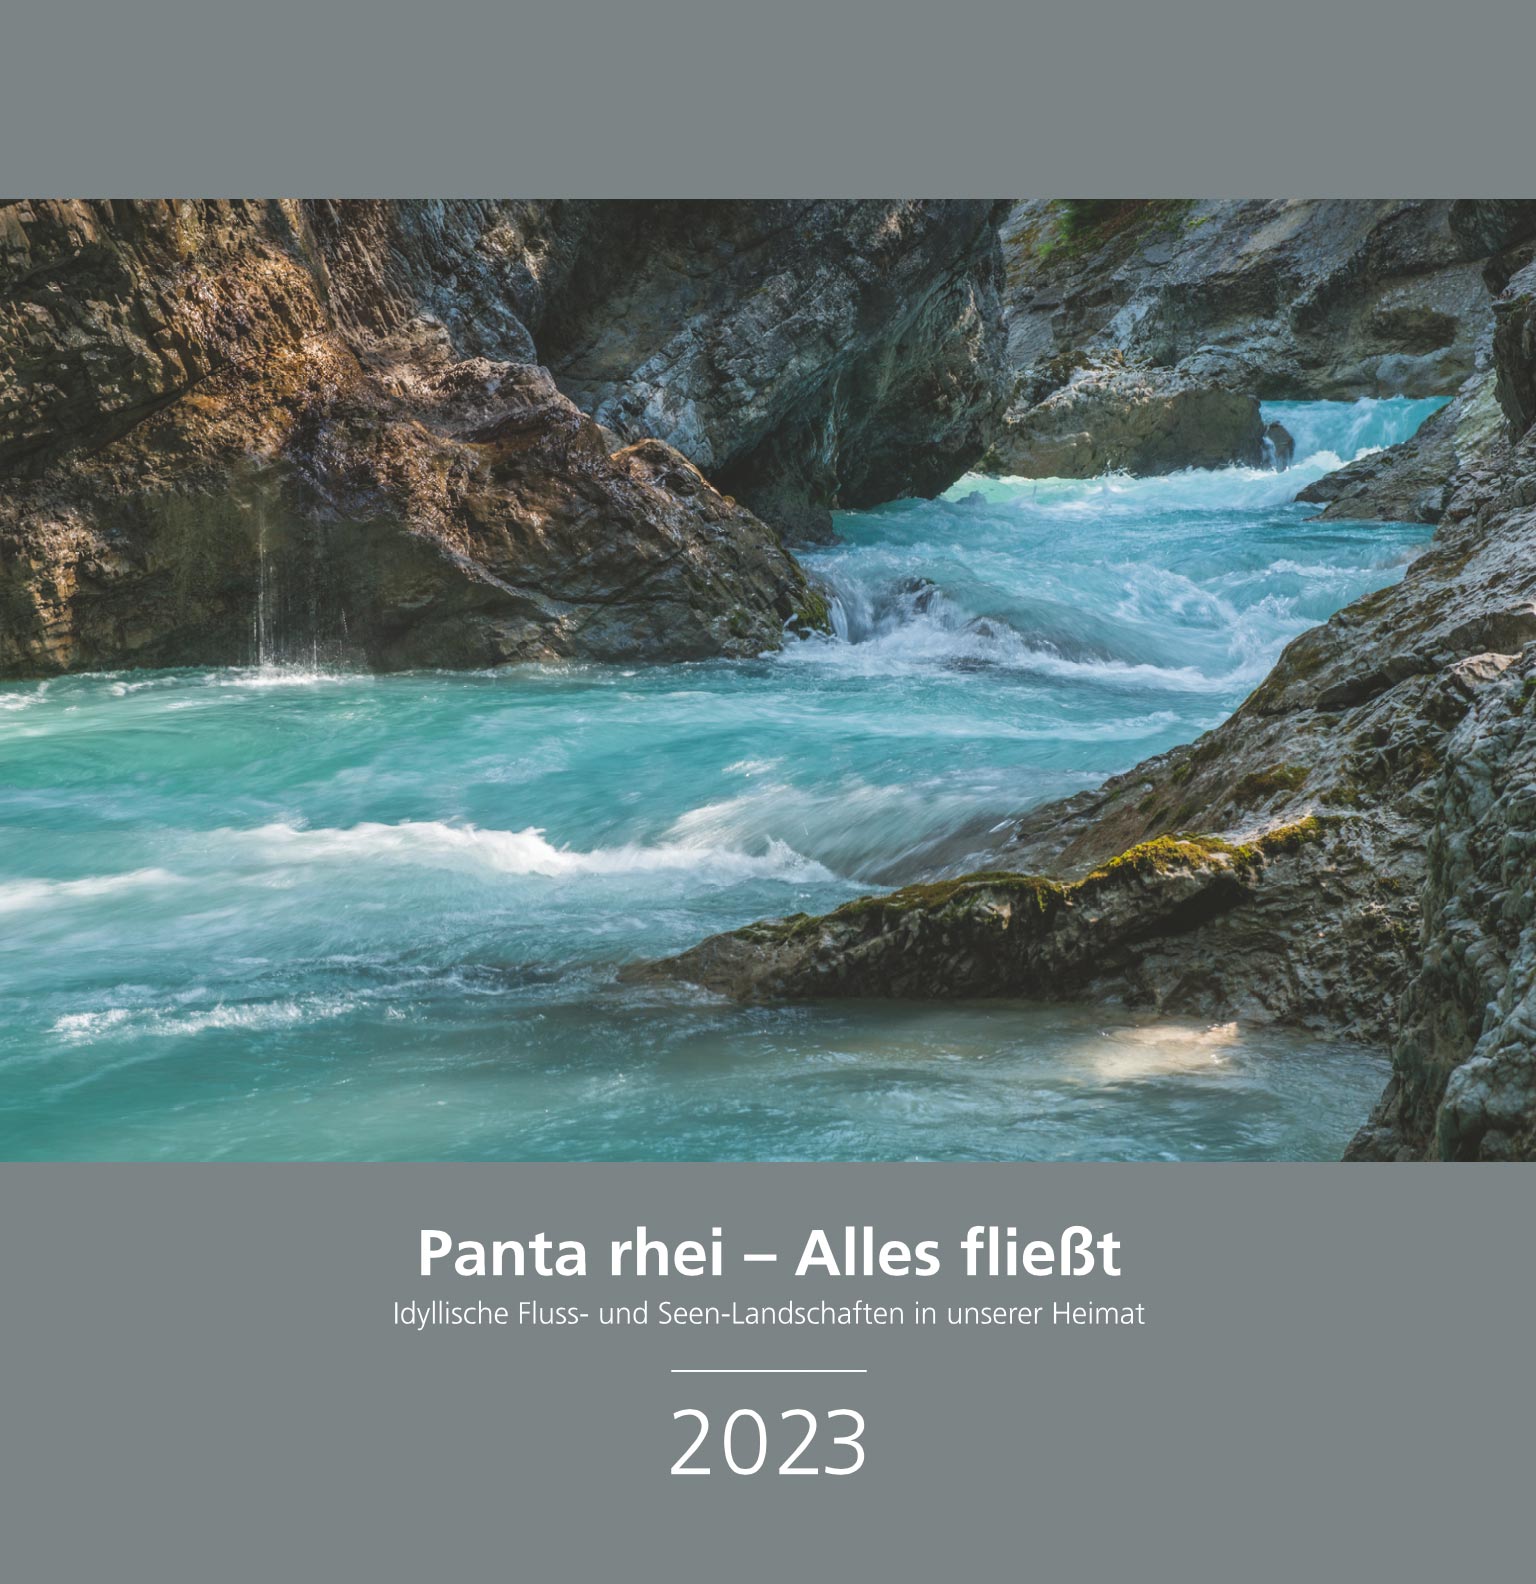 Raiffeisenbank Kalender 2023 Panta rhei